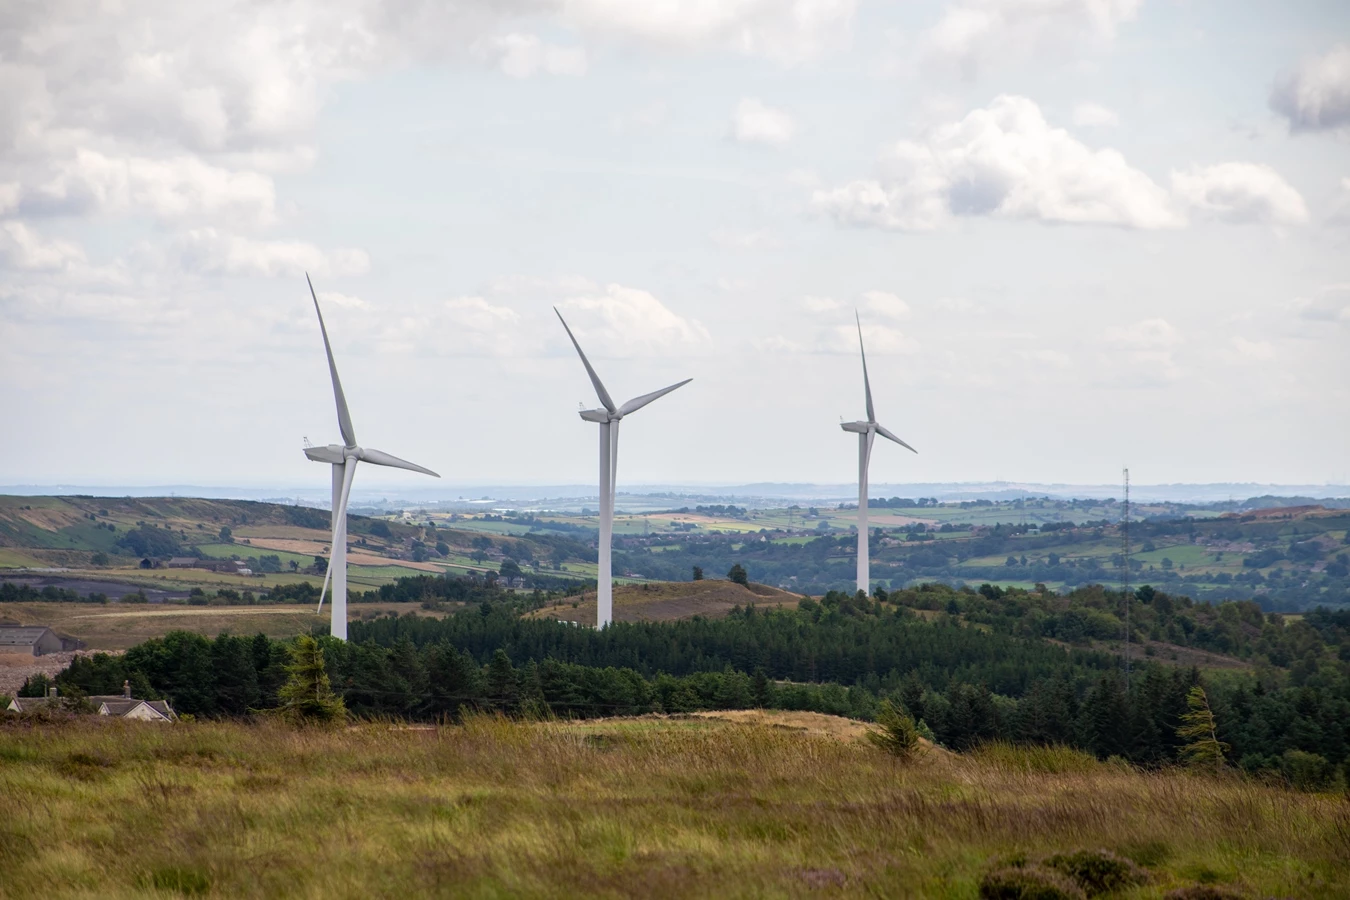 Banks Renewables' Hazlehead Wind Farm near Barnsley